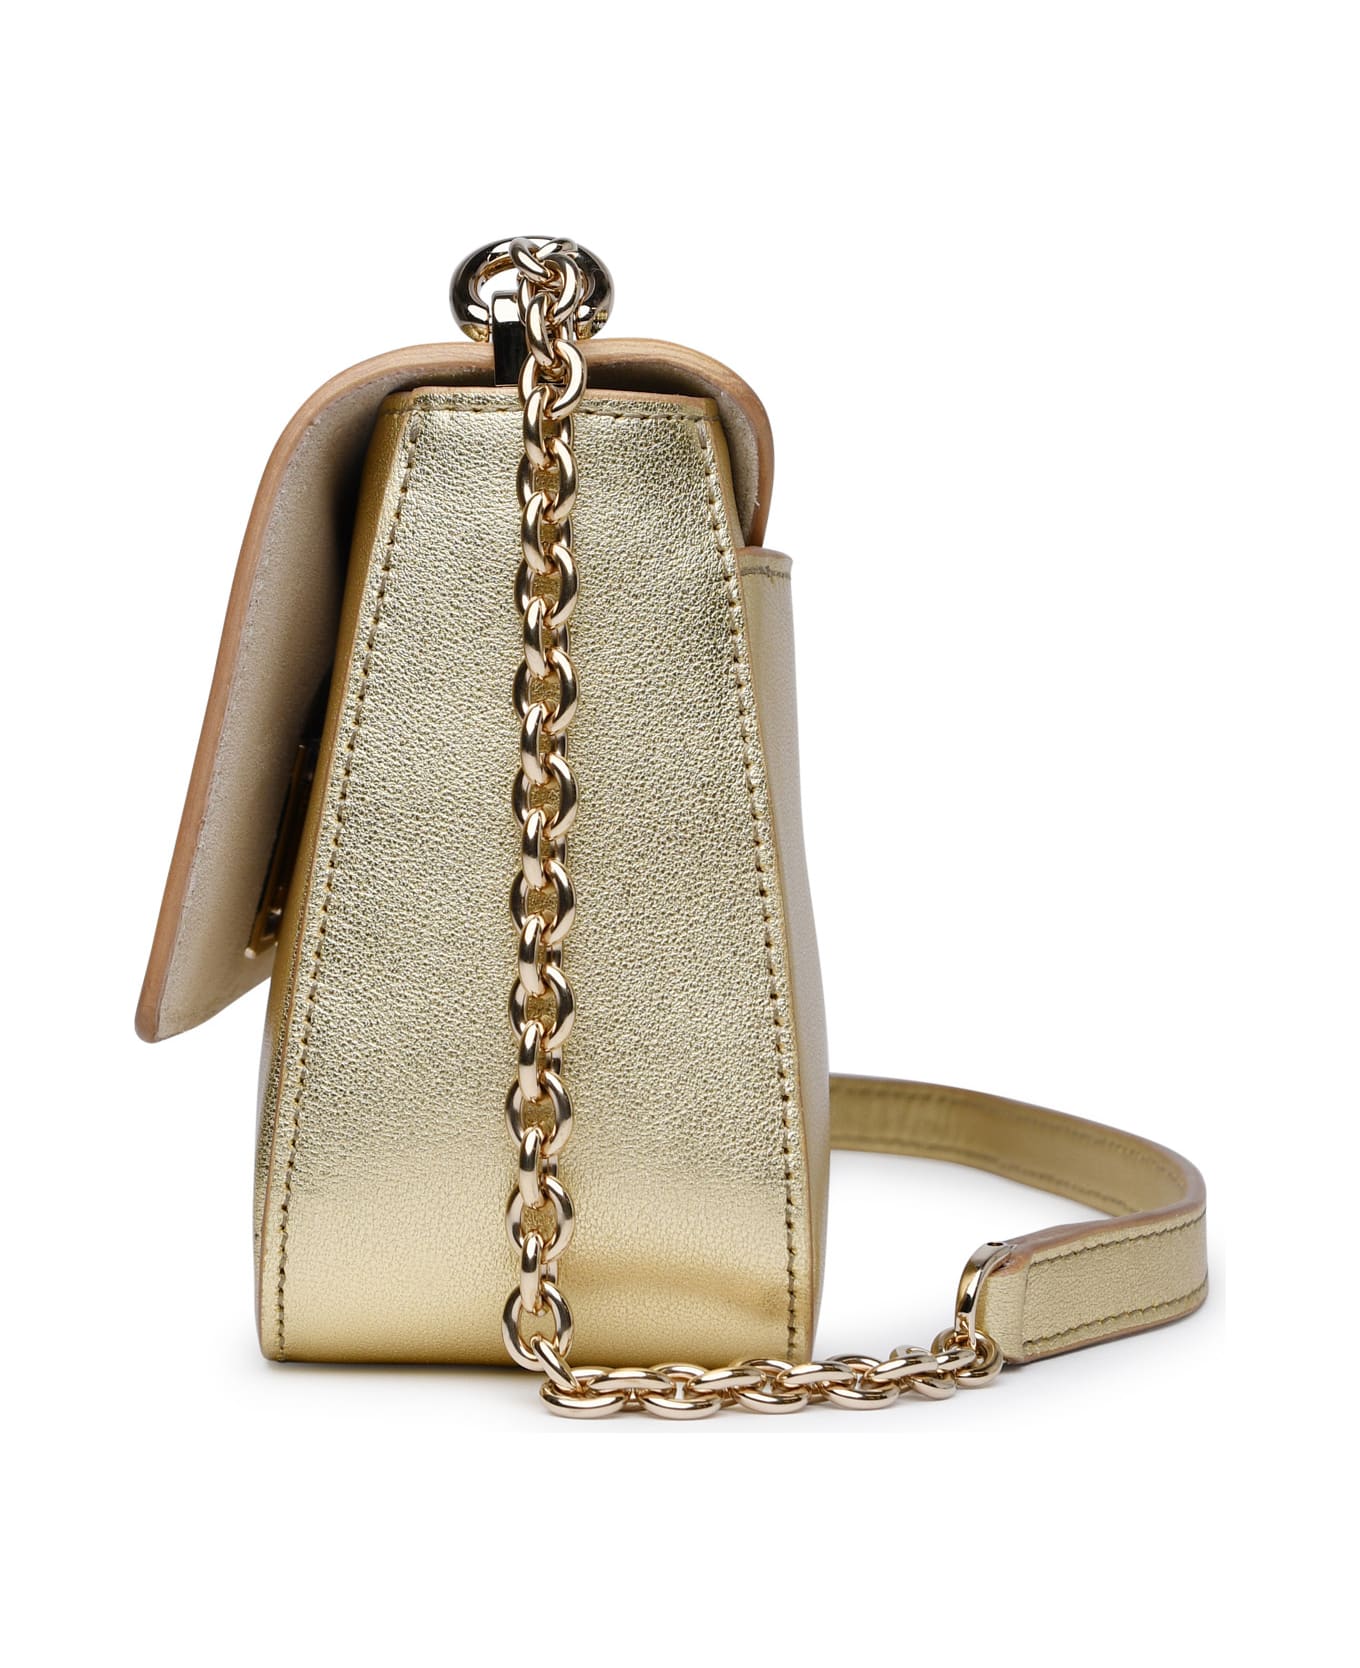 Furla 'furla 1927' Gold Calf Leather Bag - Color Gold ショルダーバッグ